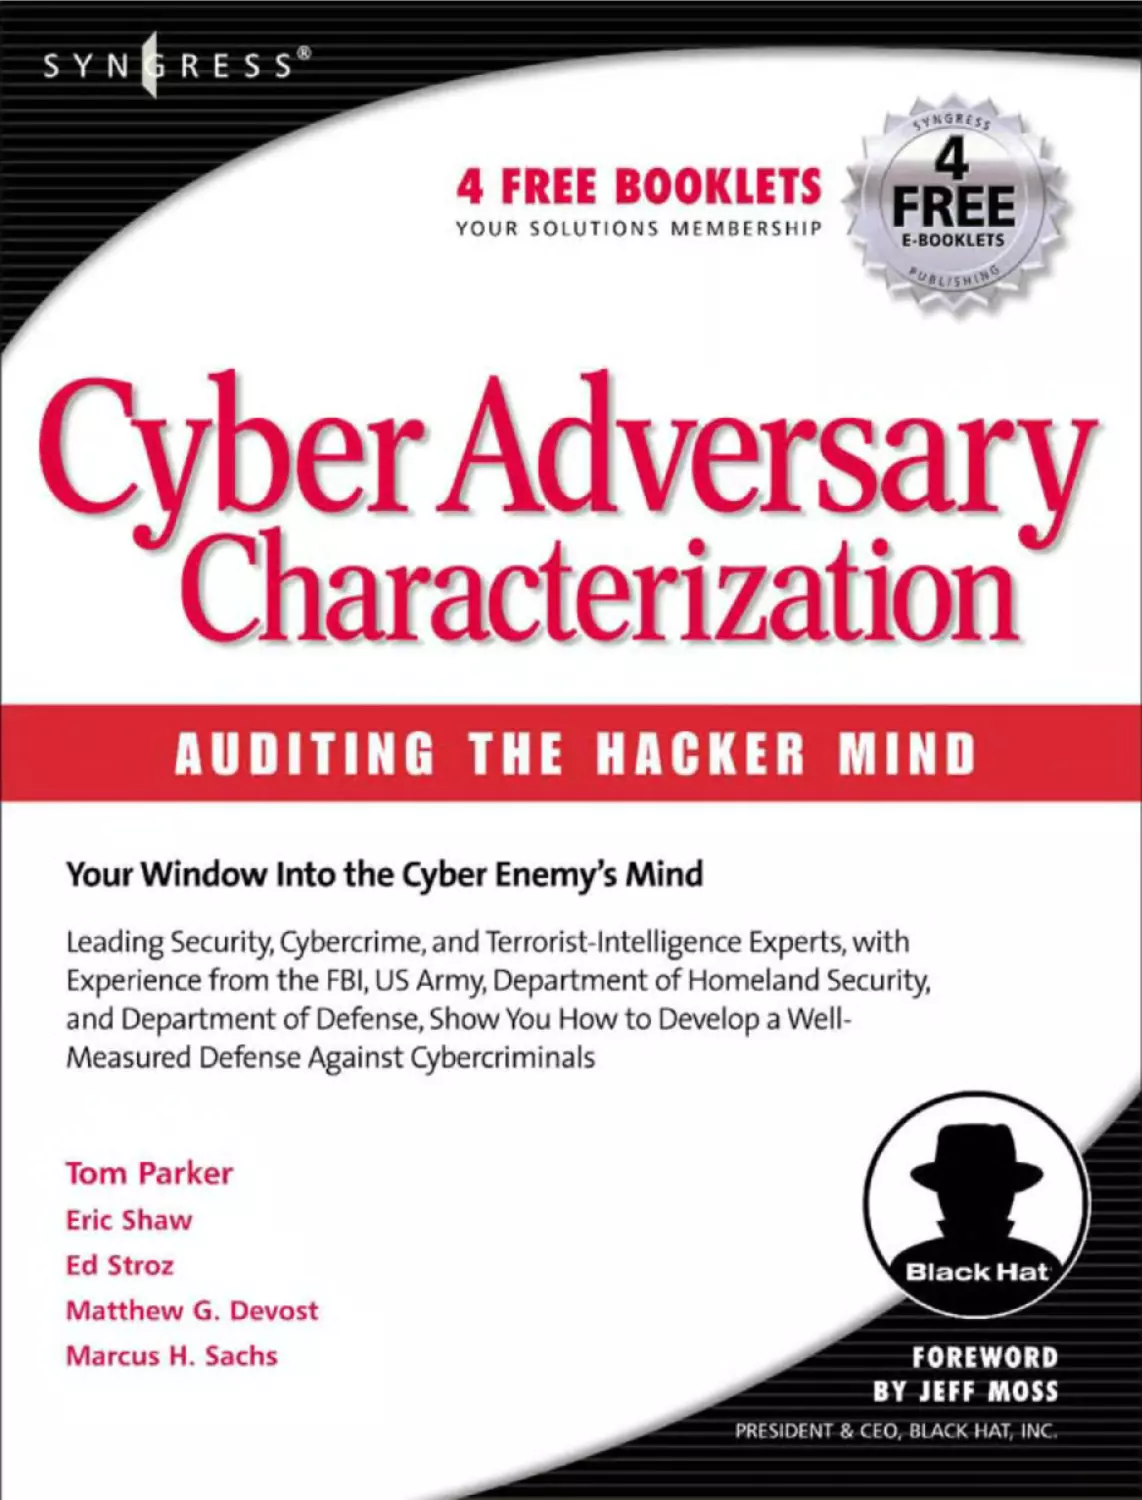 Cyber Adversary Characterization
Cover
Team DDU